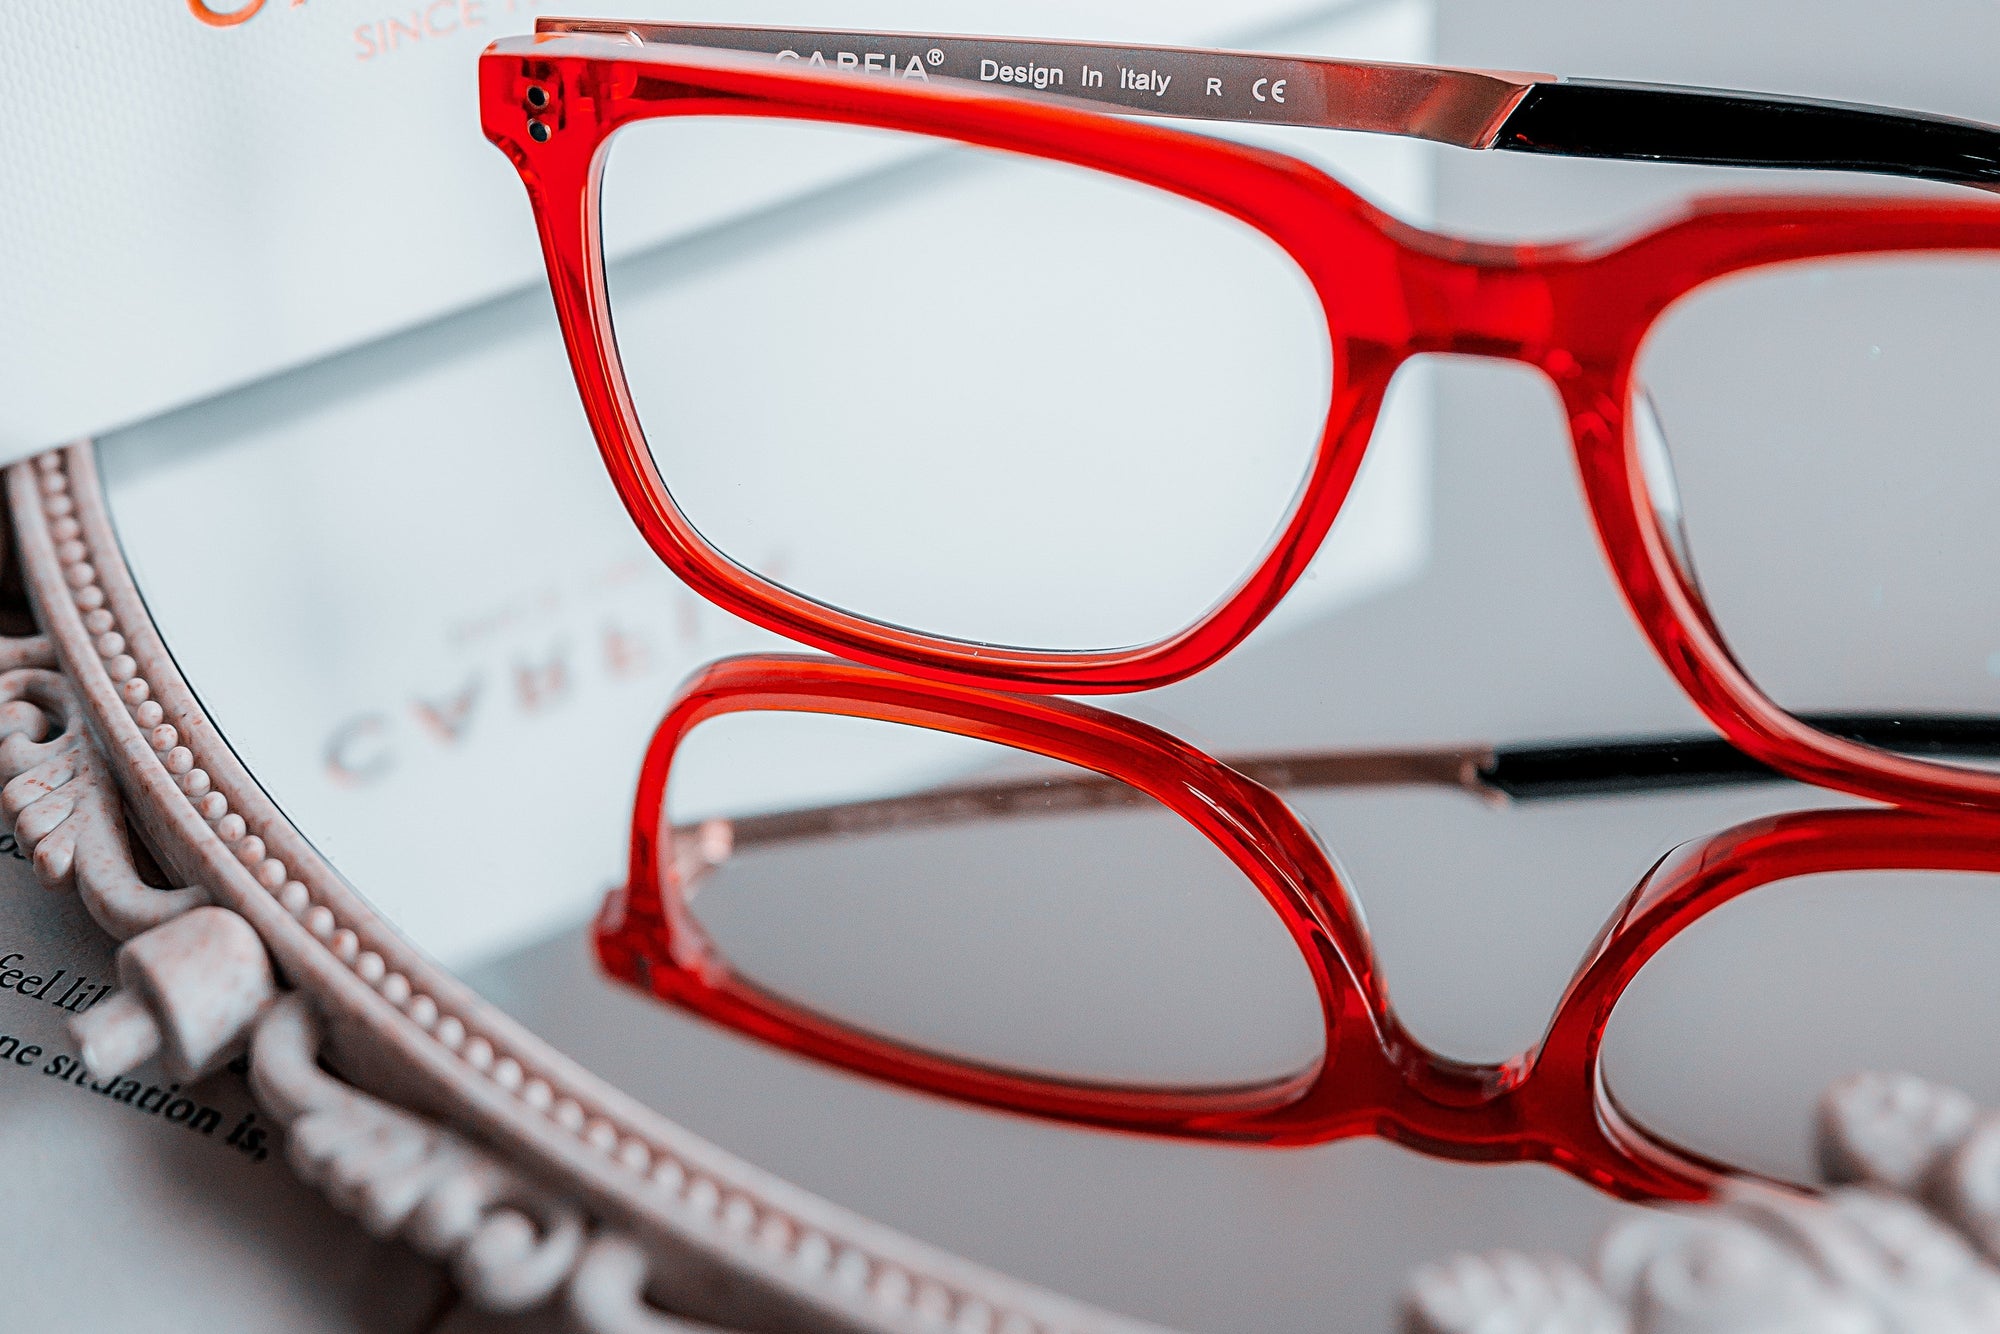 Do I Need A Face Shield If I Wear Glasses? | KOALAEYE OPTICAL